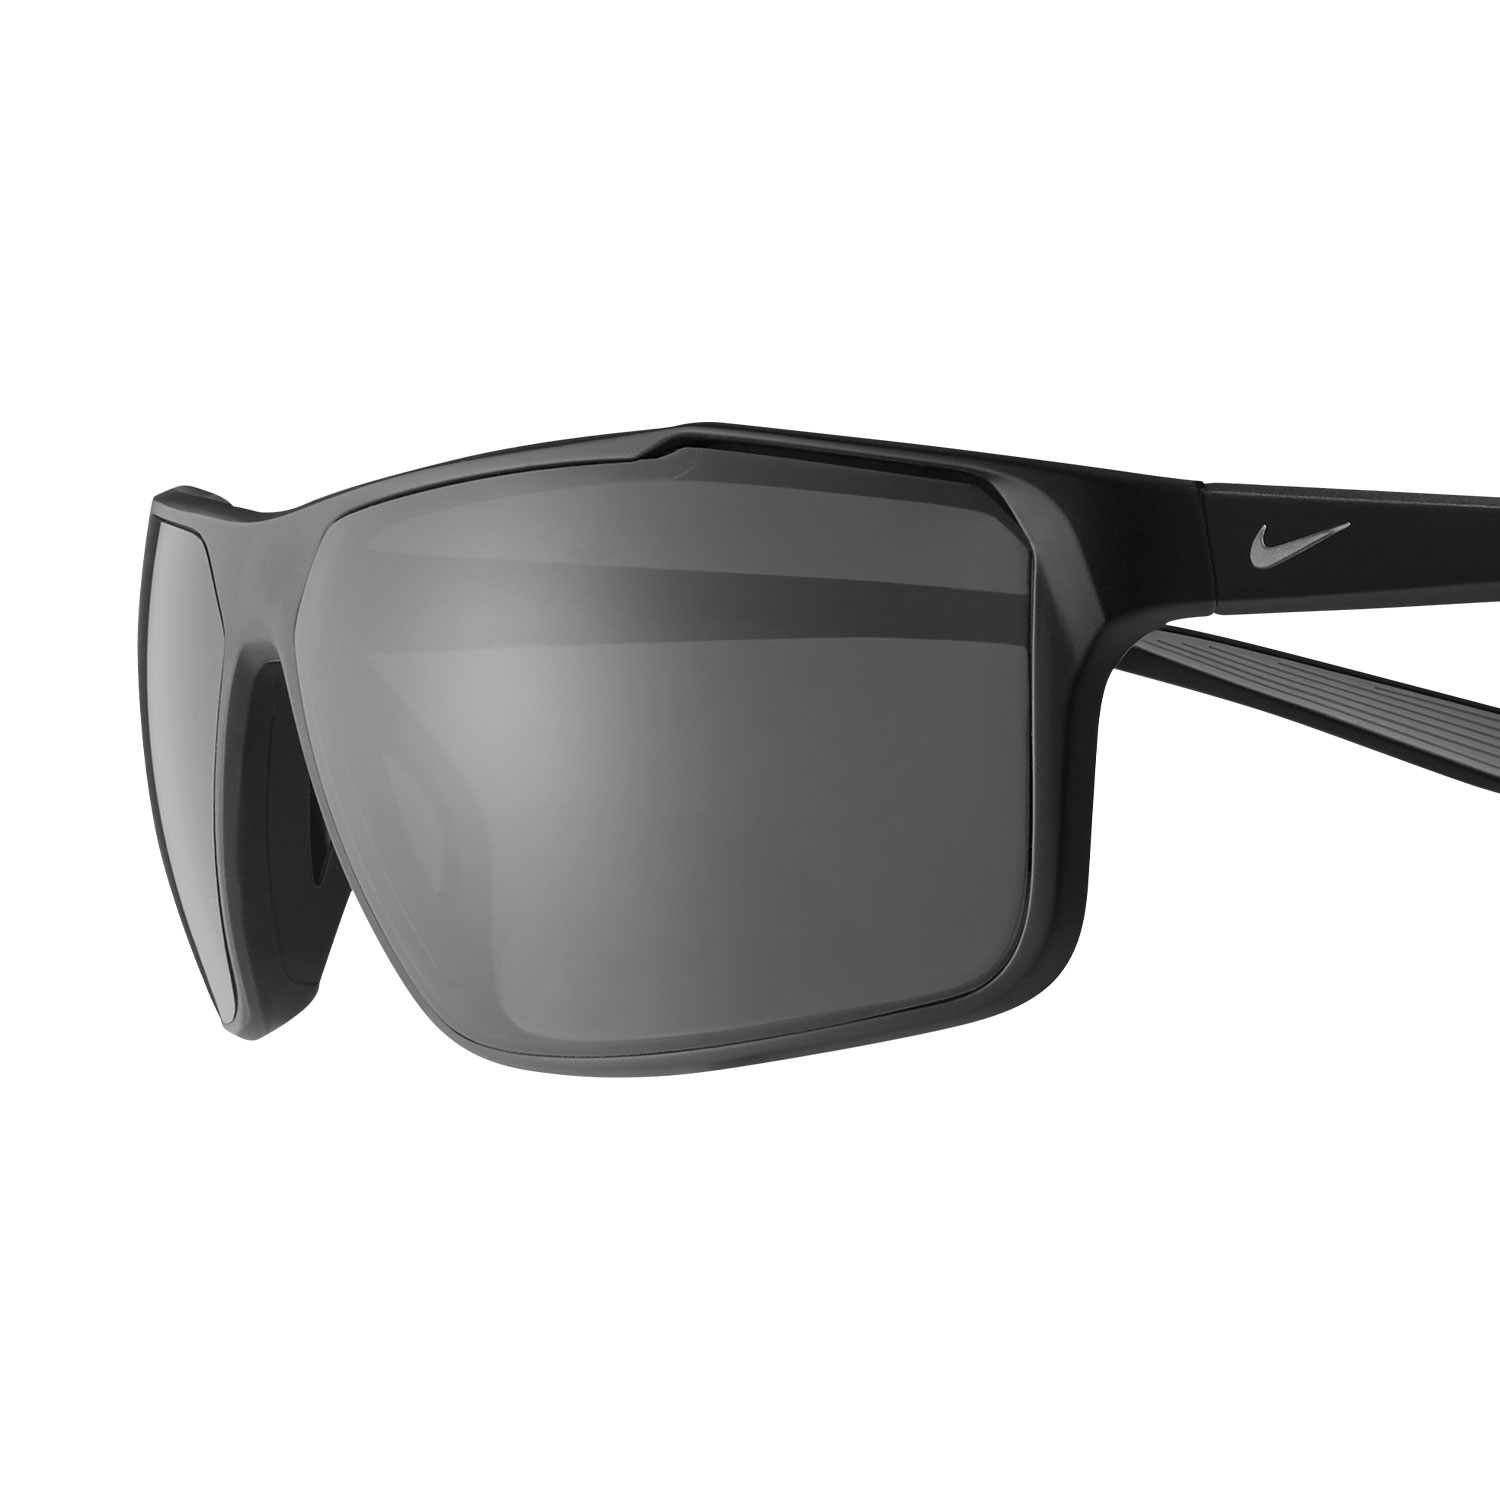 Nike Windstorm Sunglasses - Matte Black/Silver W/Grey Polarized Lens